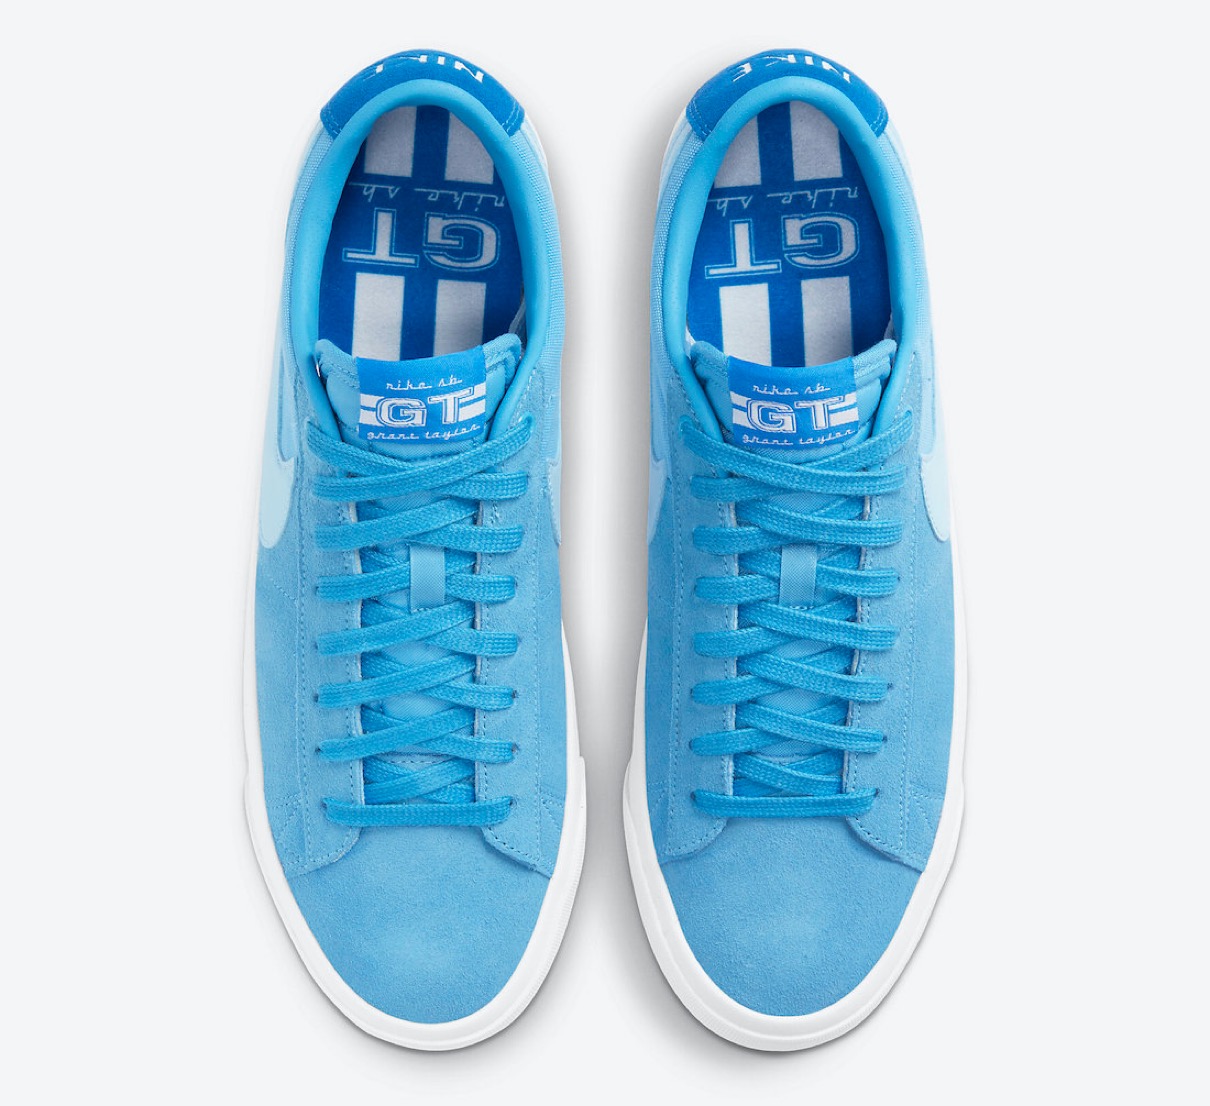 Nike Sb Blazer Low Pro Gt Psychic Blue が国内3月13日に発売予定 Up To Date